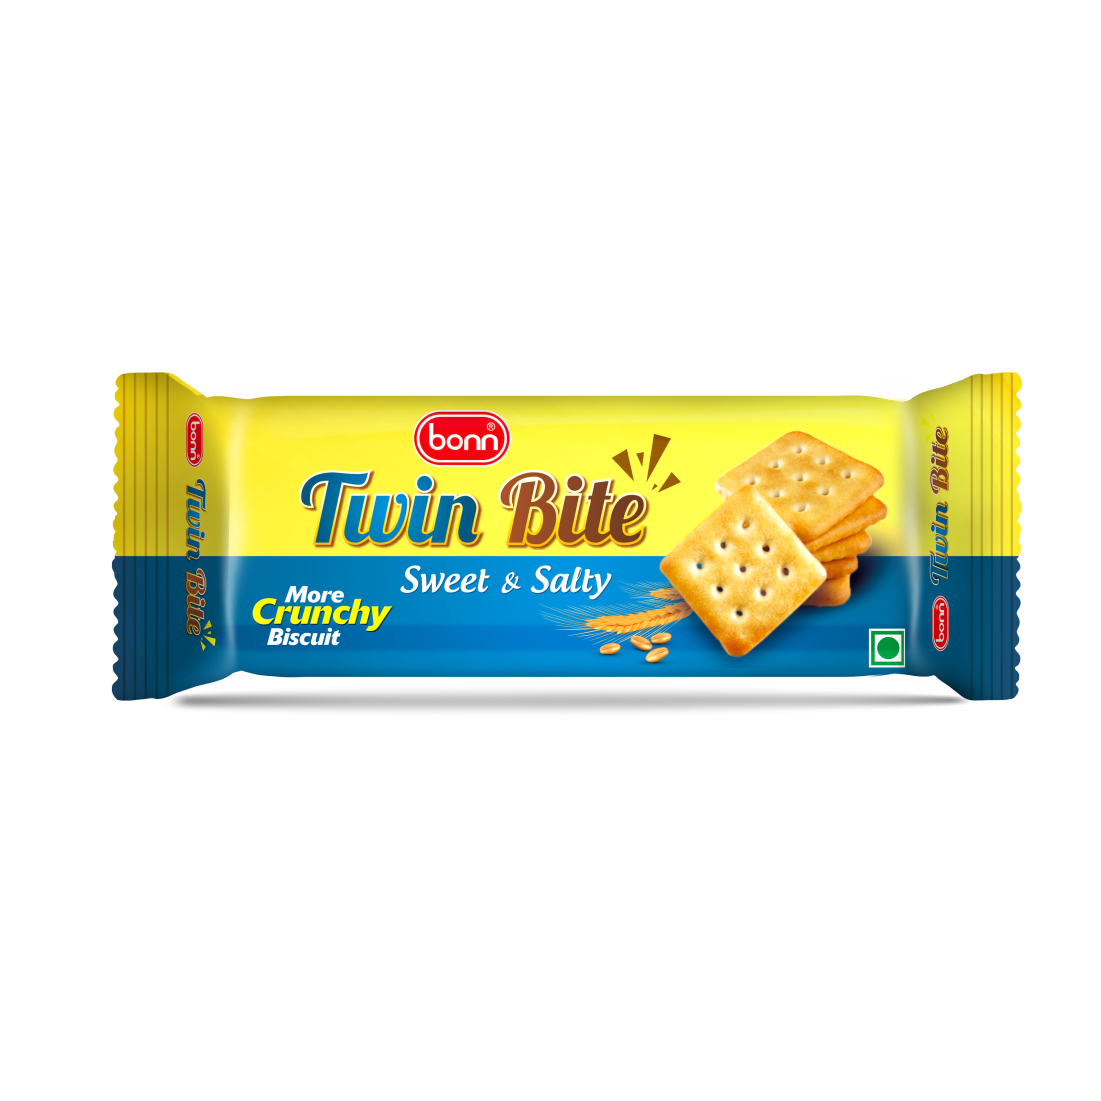 Bonn Twin Bite, Sweet & Salty Cracker Biscuits, 45 g Pack